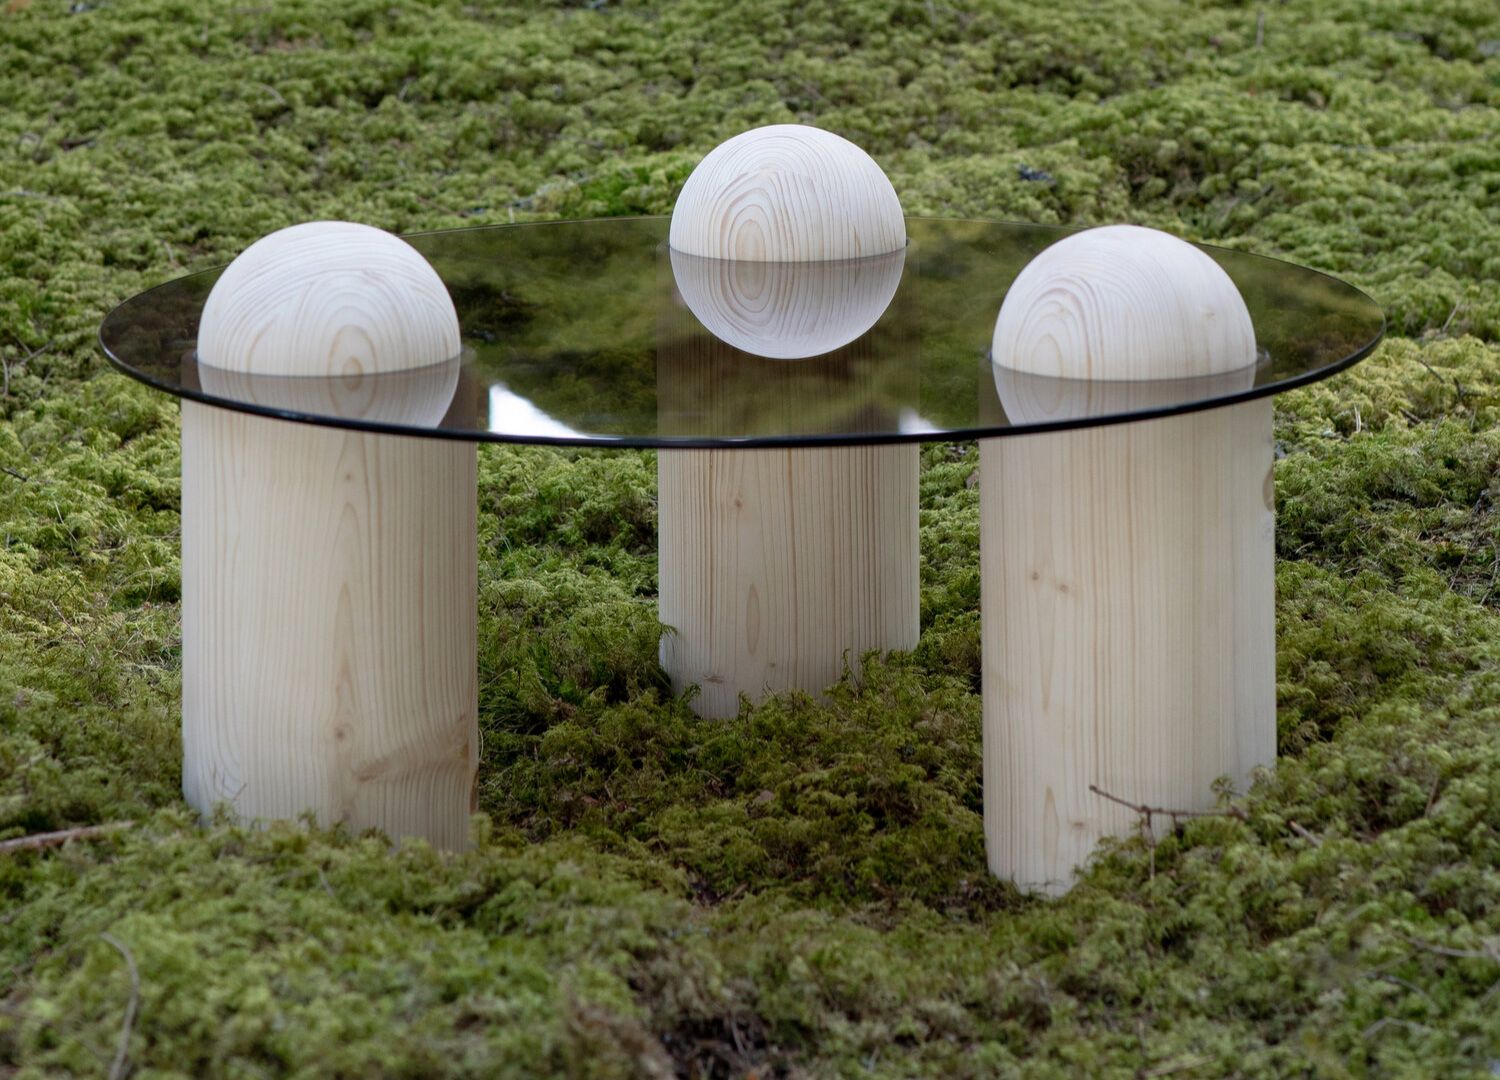 Jonas Coffee Table by LI-AN-LO Studio - Product Design using mycelium